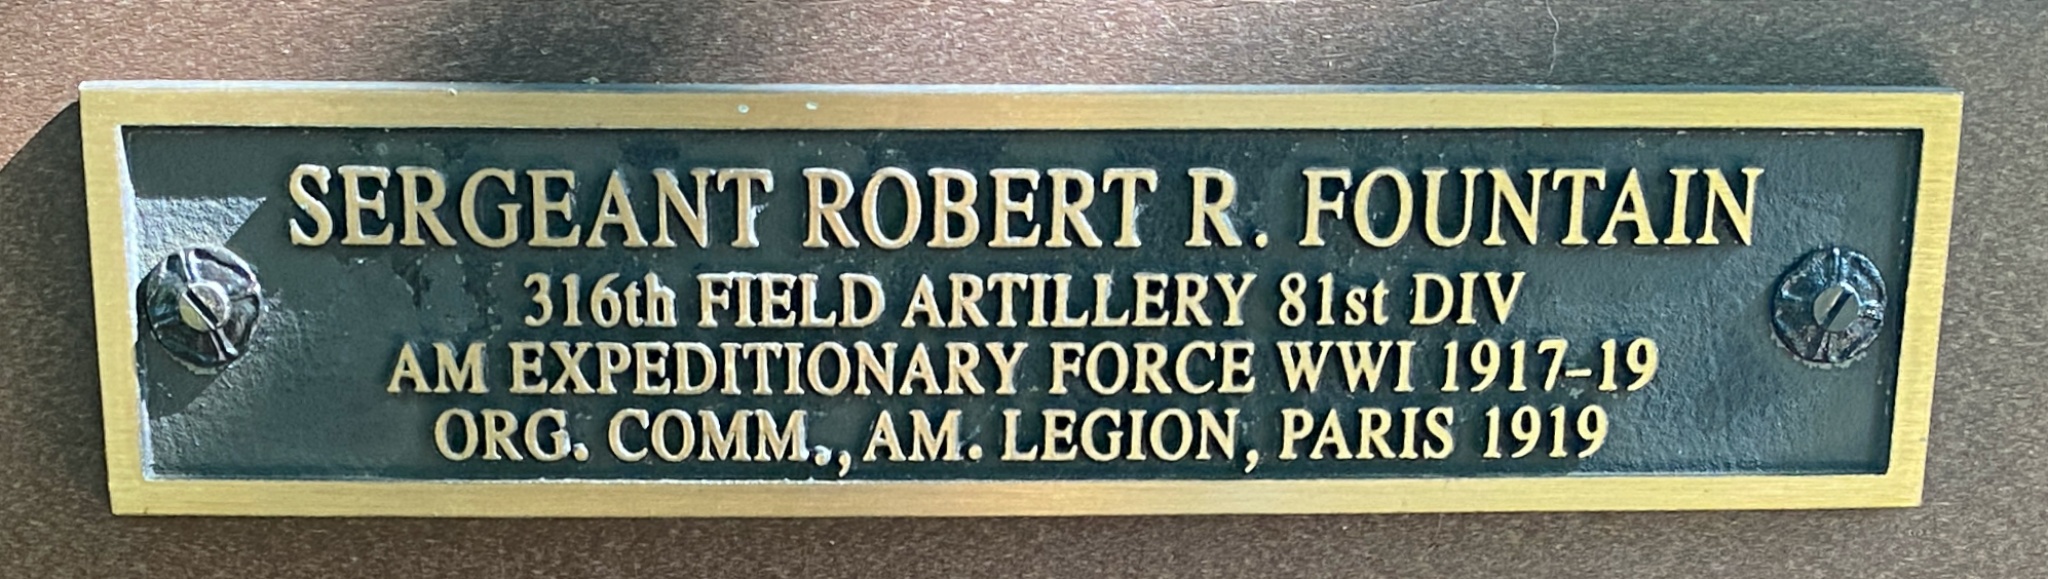 SERGEANT ROBERT R. FOUNTAIN 316th FIELD ARTILLERY 81st DIV AM EXPEDITIONARY FORCE WW I 1917-19 ORG. COMM., AM. LEGION, PARIS 1919